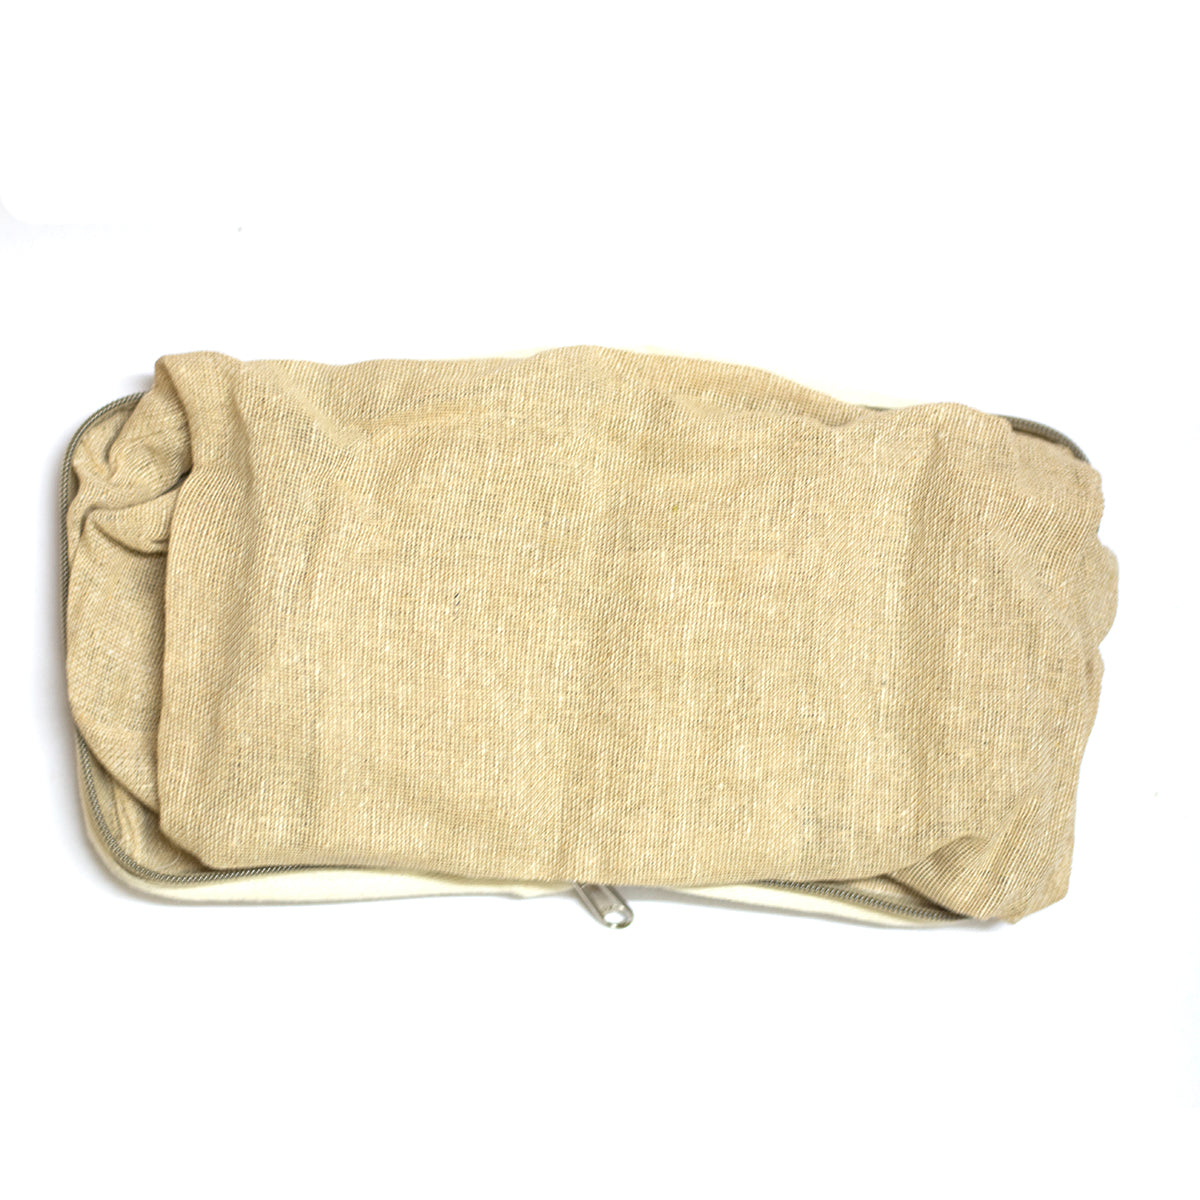 Foldable and reusable jute cotton shopping bag